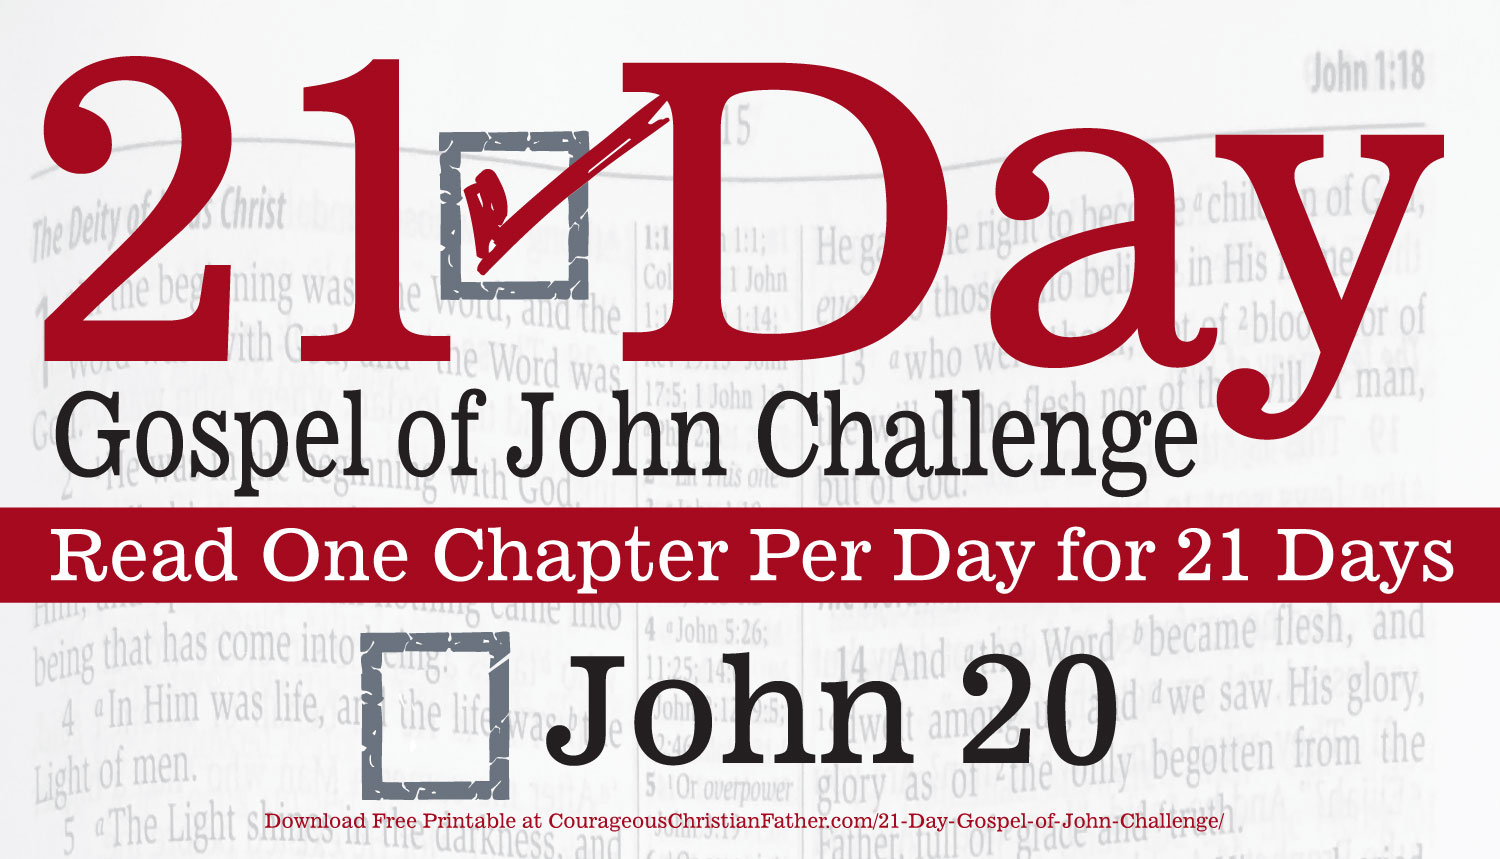 John 20 - Today is Day 20 of the 21 Day Gospel of John Challenge. Today read the 20th Chapter of the Gospel of John. #John20 #BGBG2